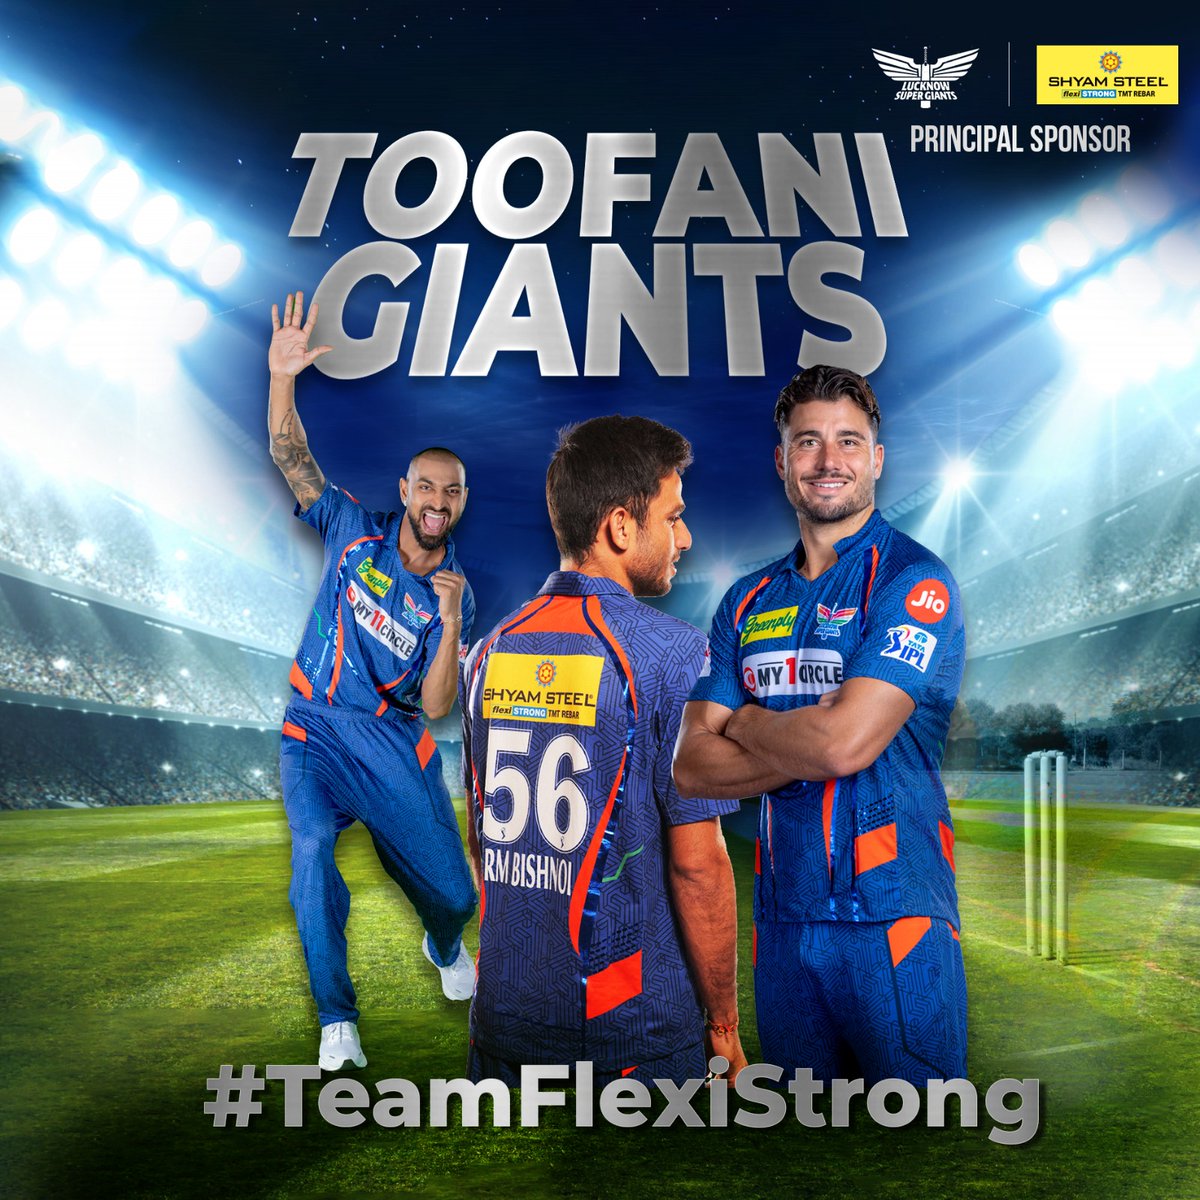 Toofani Giants ke Toofani khel se tham jayenge sare Dil.

All the best to our #TeamFlexiStrong @LucknowIPL 

#ShyamSteel #ShyamSteelIndia #TeamFlexiStrong #Strength #Flexibility #HameshaKeLiyeStrong #LSG #Cricket #IPL #IndianCricket #CricketFans #Lucknow